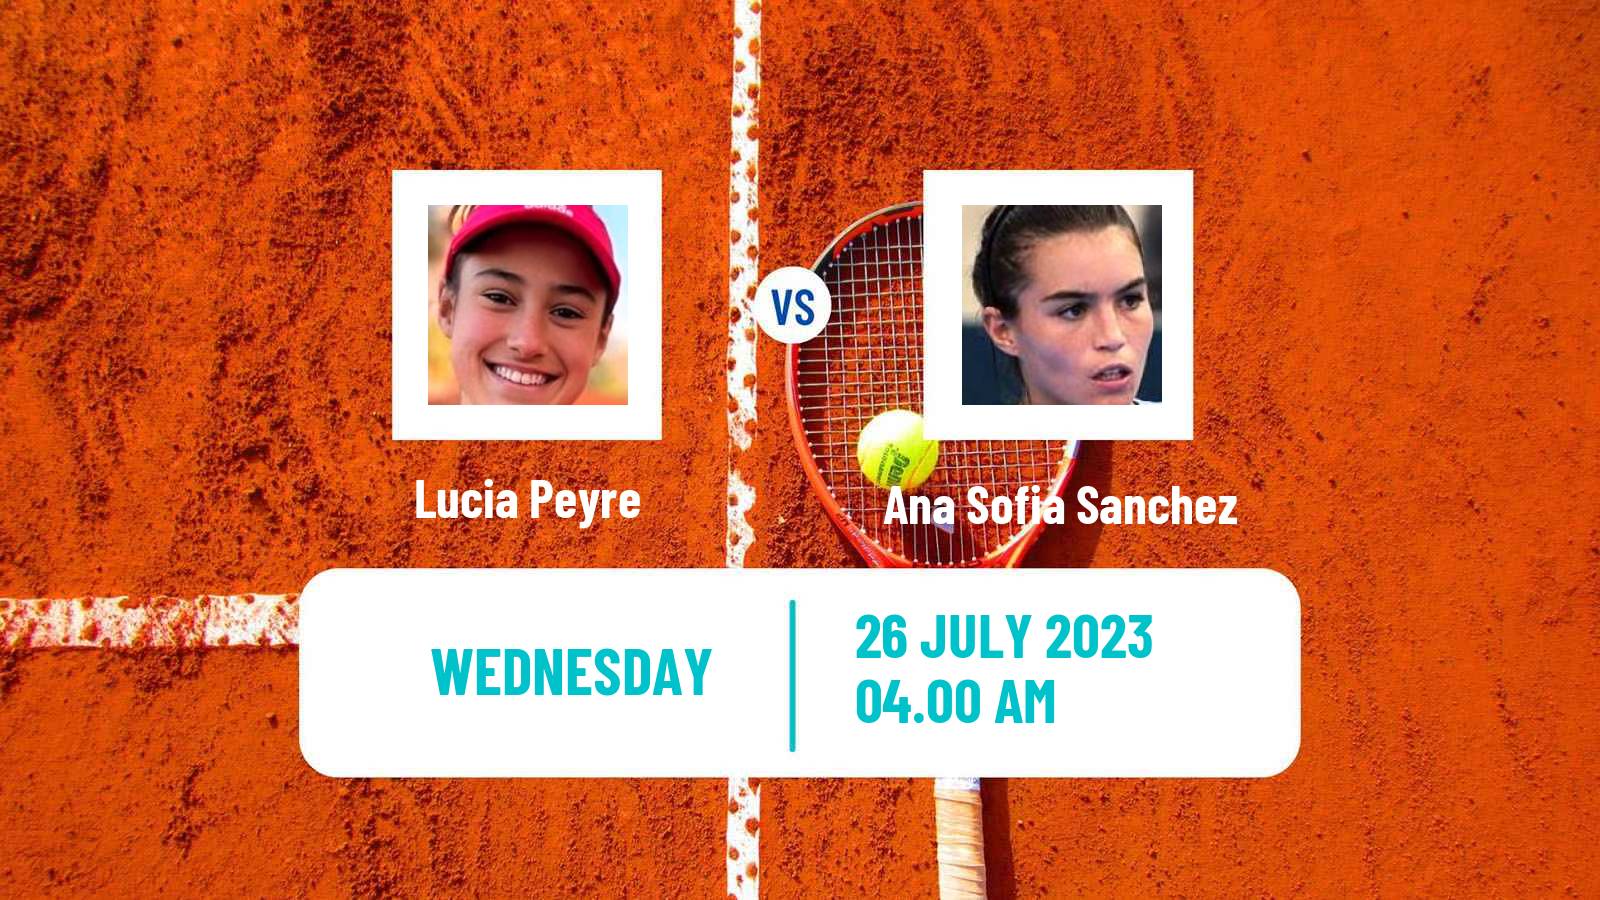 Tennis ITF W25 El Espinar Segovia Women Lucia Peyre - Ana Sofia Sanchez